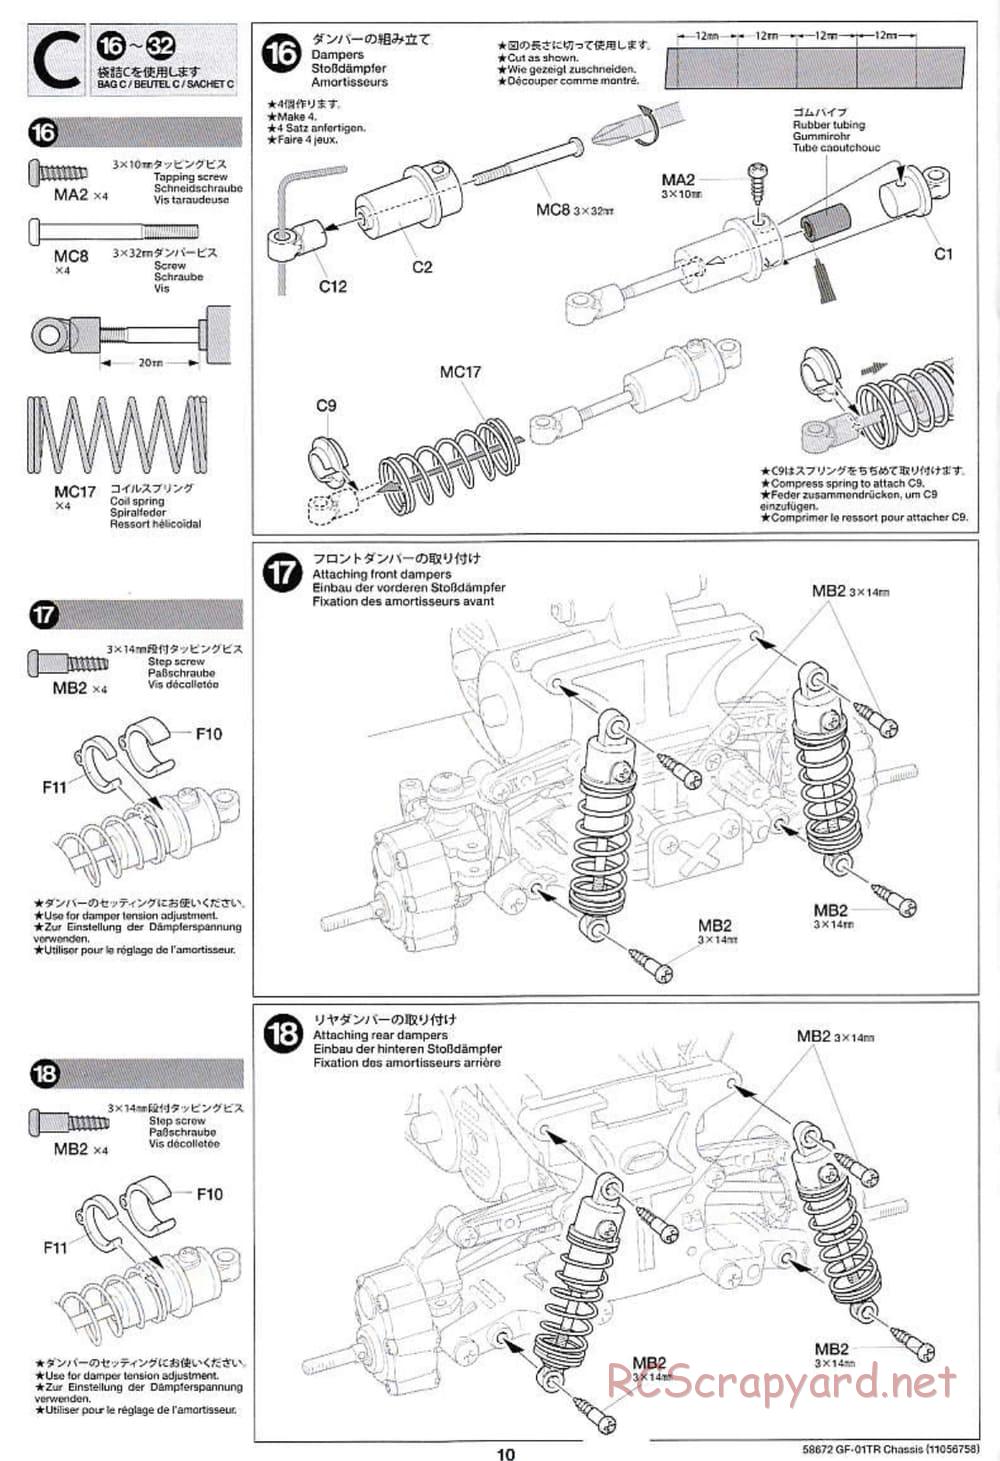 Tamiya - Monster Beetle Trail - GF-01TR Chassis - Manual - Page 10